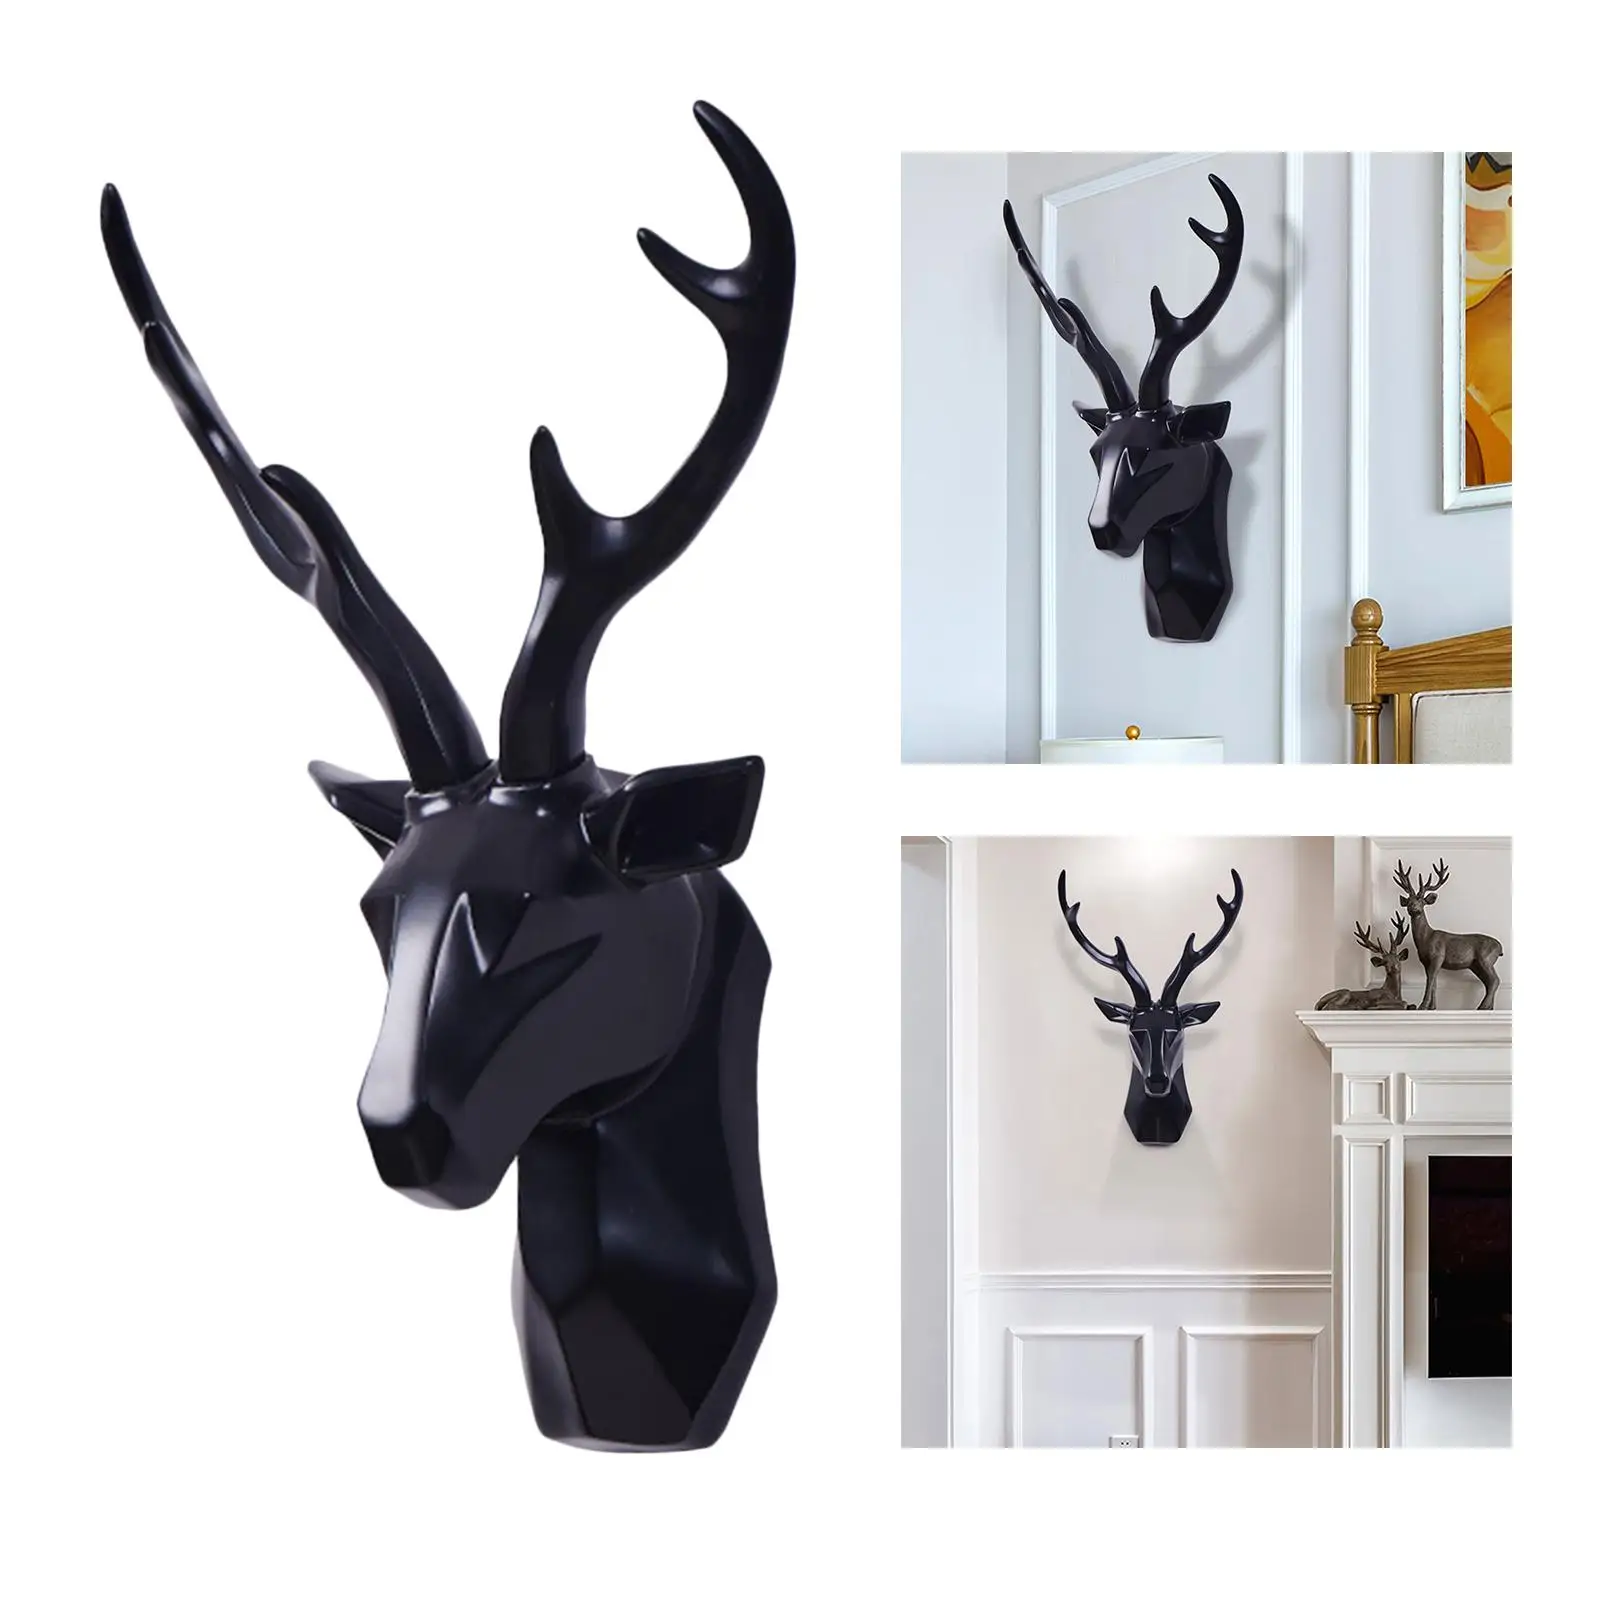 3 Head Decorative -Elegant Wall Sculpture Decor -Farmhouse Decor -Geometry Deer Antlers Gallery Wall